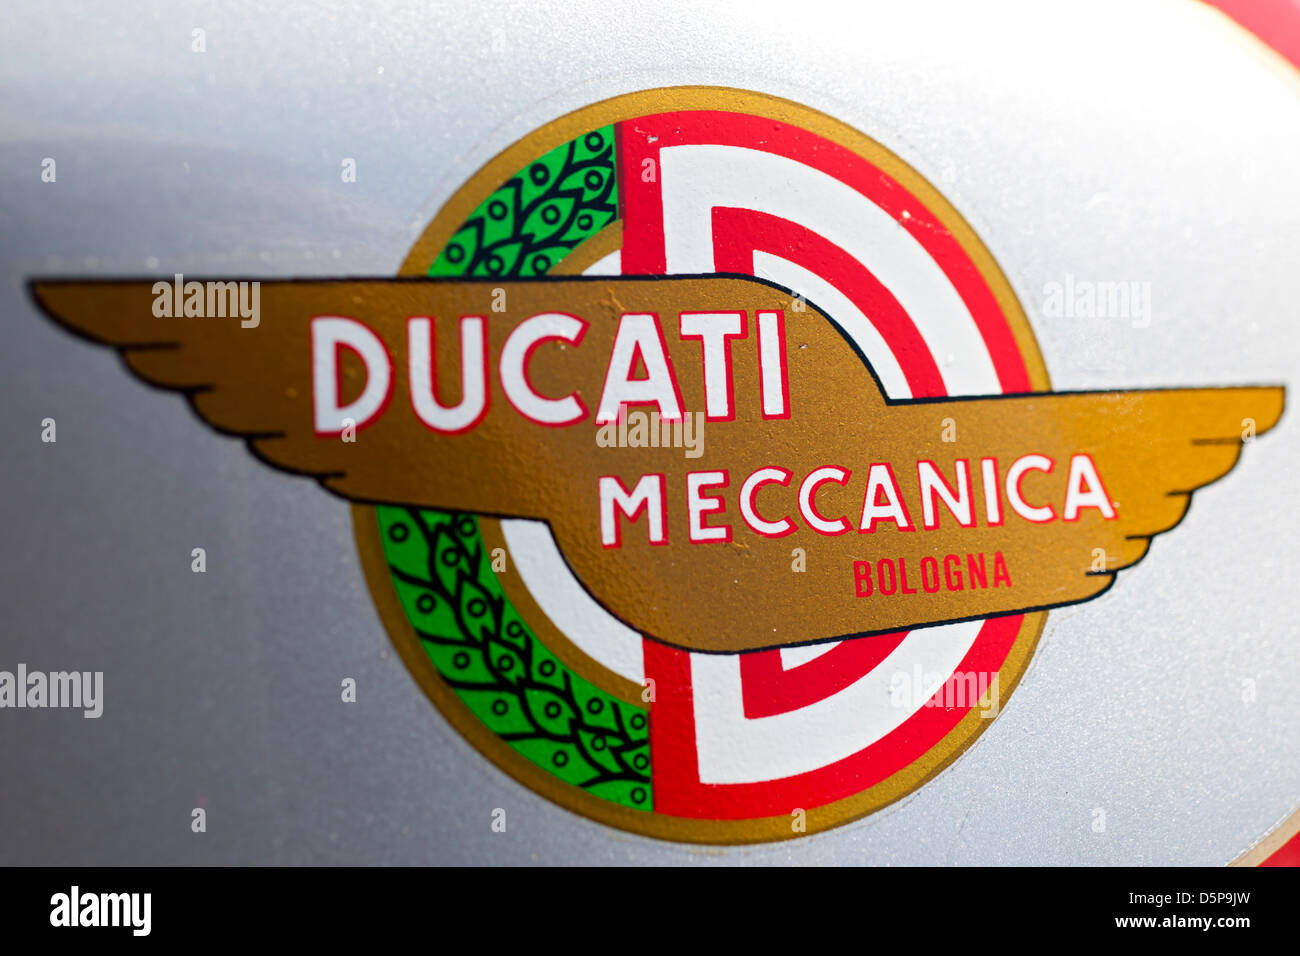 Ducati Meccanica Foto de stock